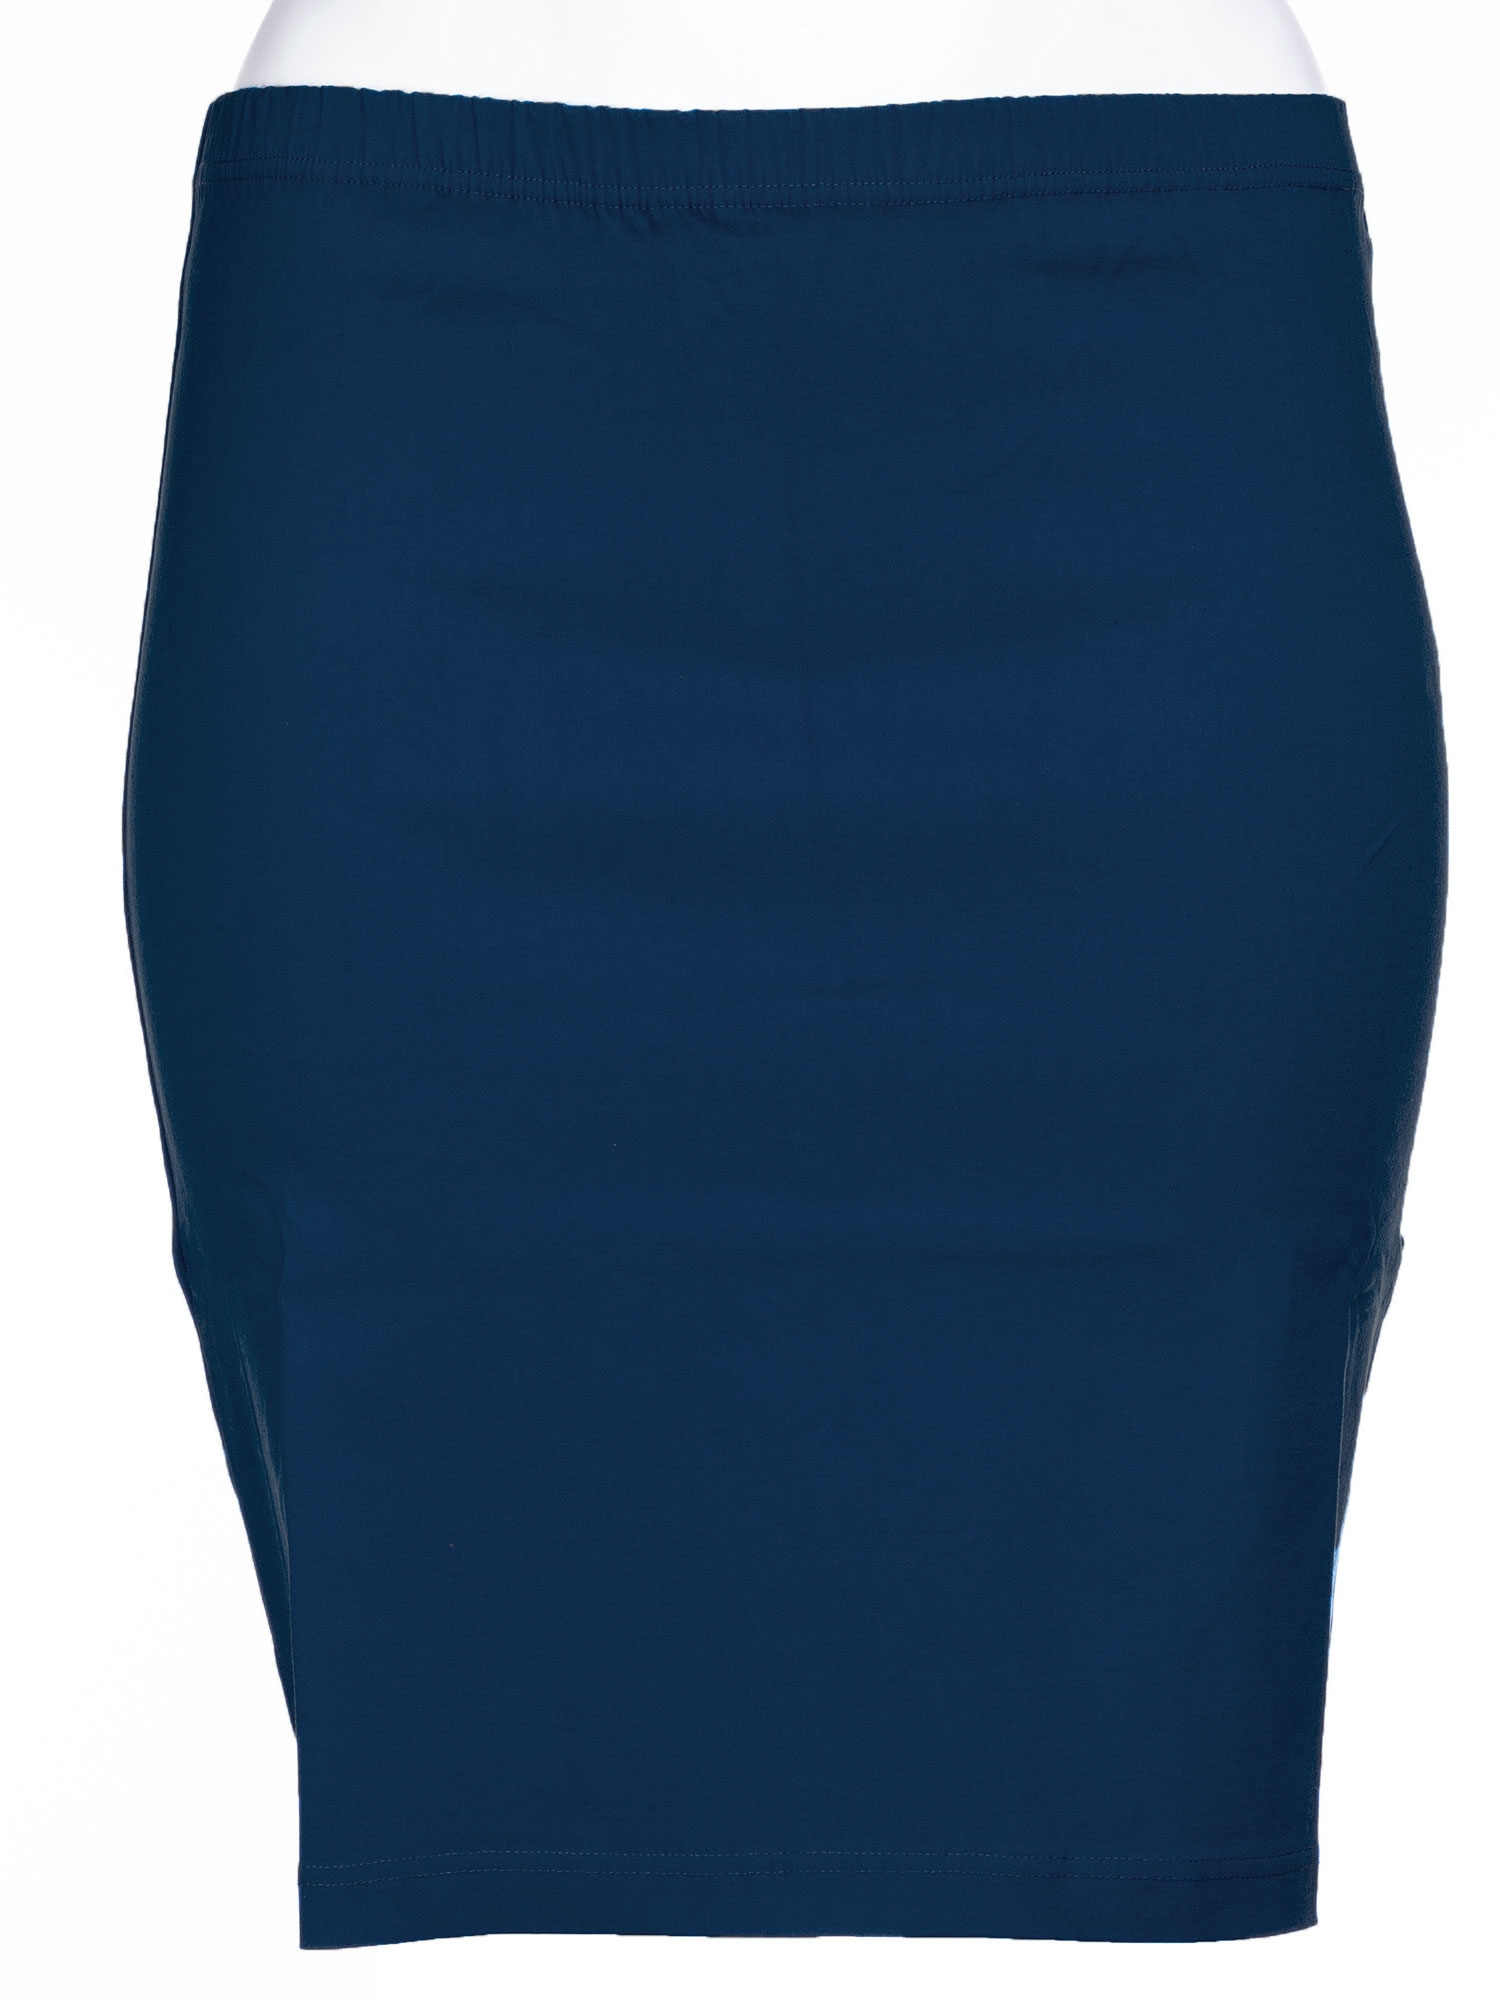 Clare - Mørkeblå nederdel  fra Gozzip